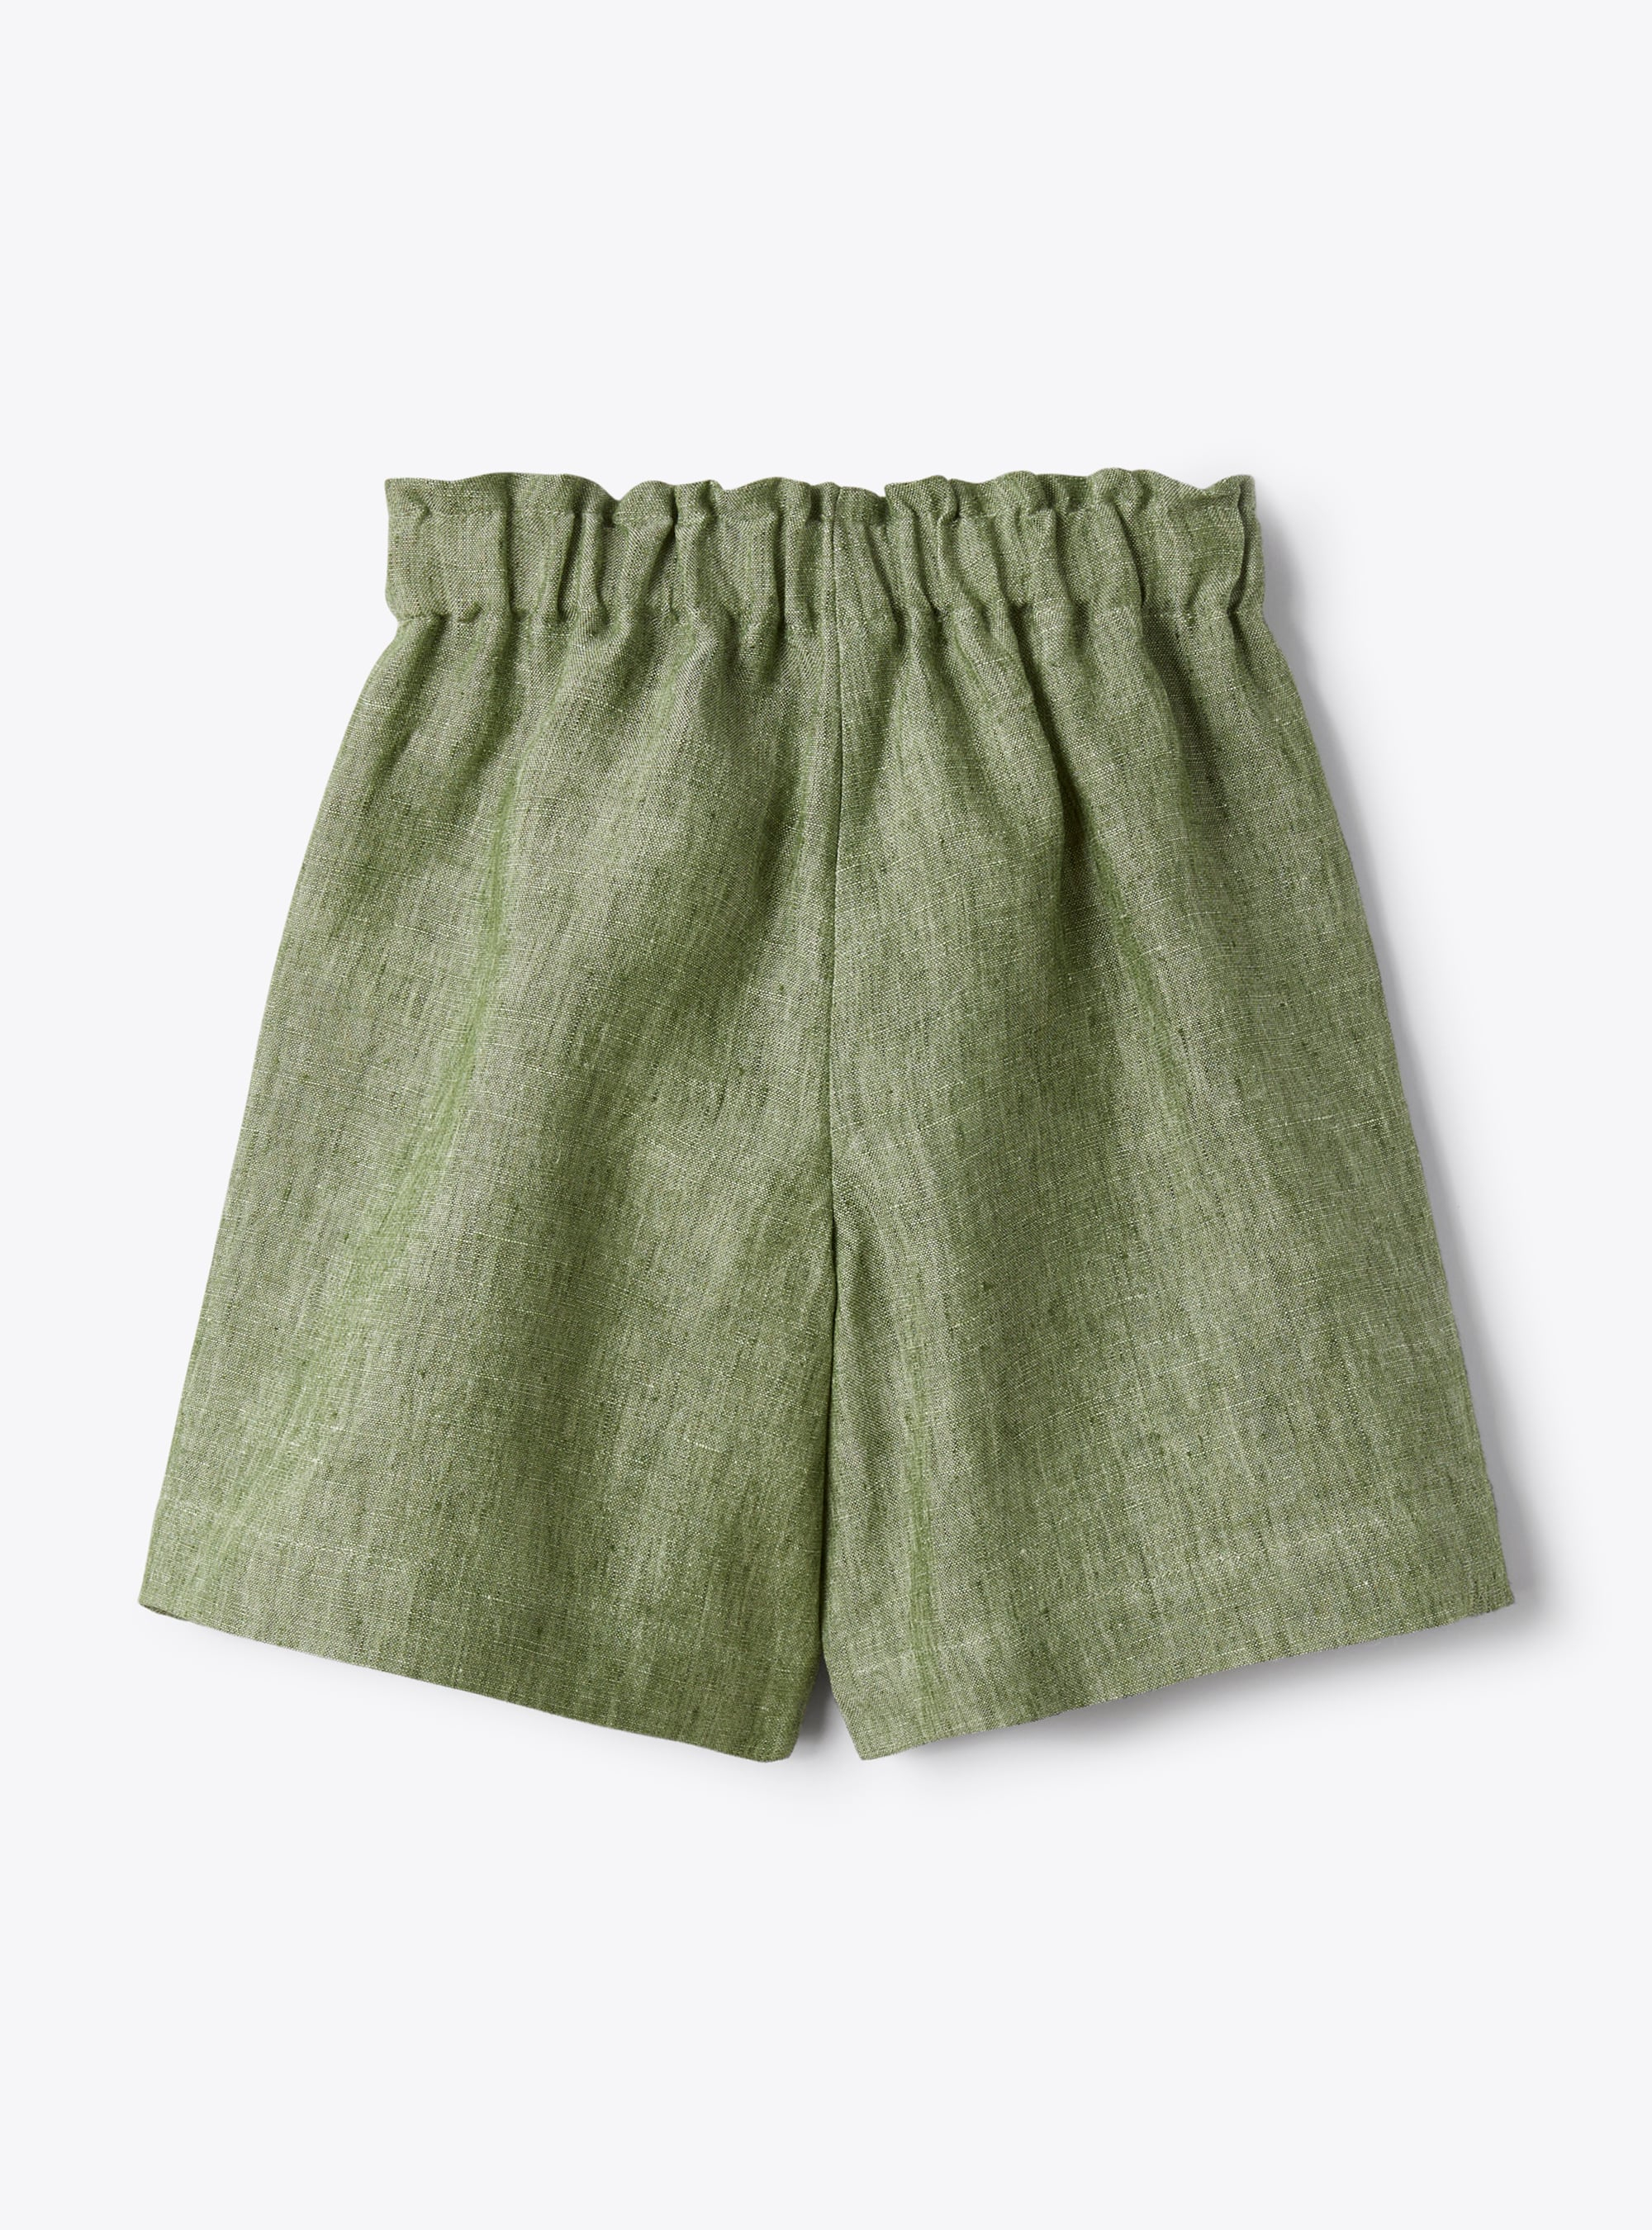 Bermuda shorts in sage-green mélange linen - Green | Il Gufo